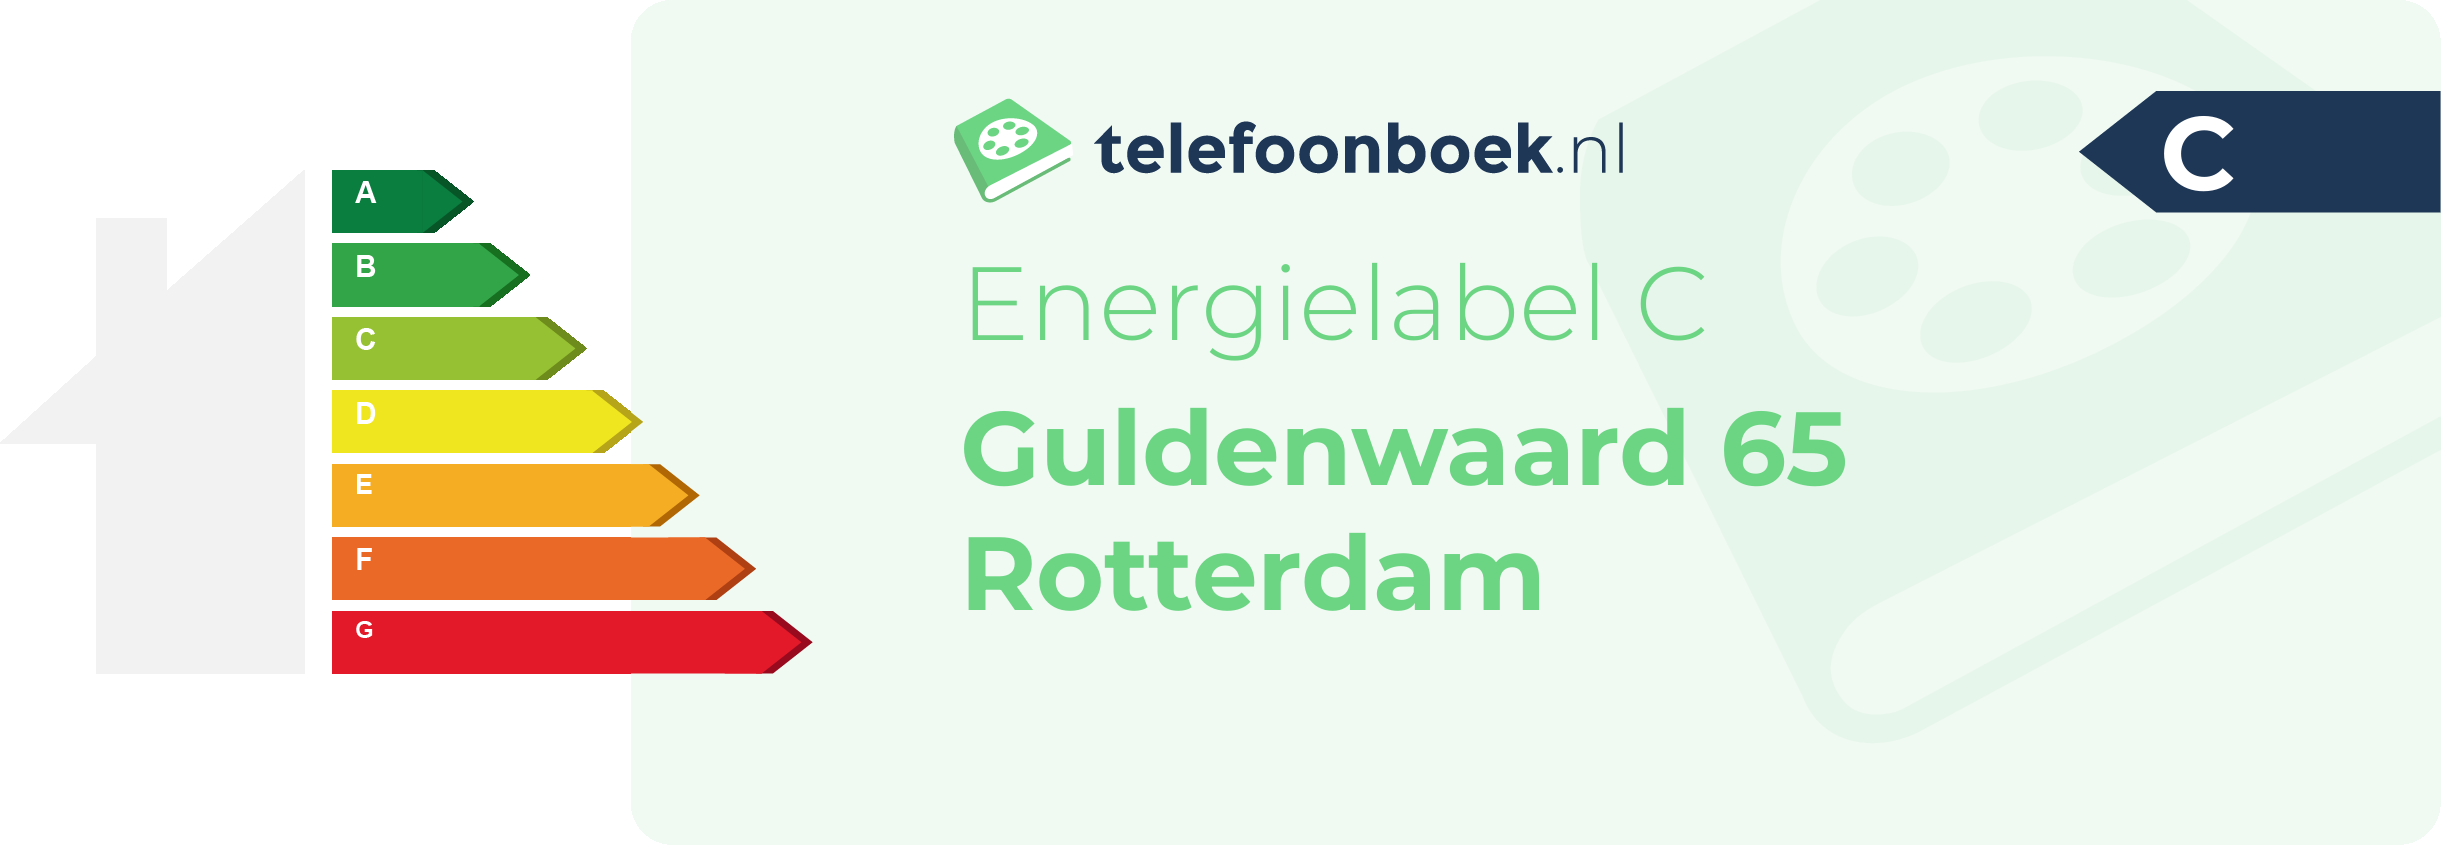 Energielabel Guldenwaard 65 Rotterdam